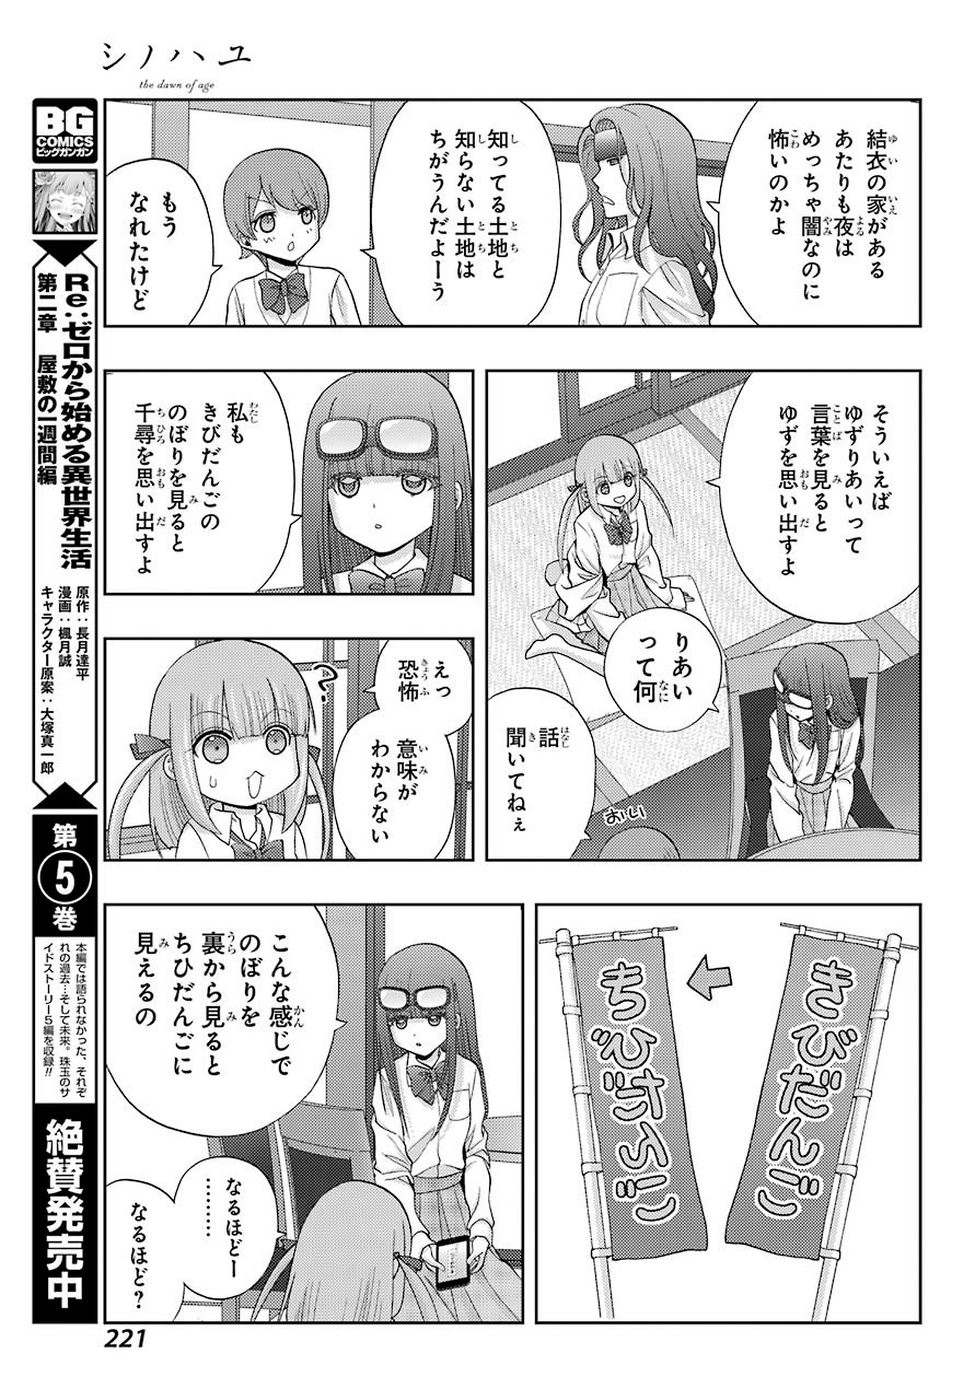 Shinohayu - The Dawn of Age Manga - Chapter 073 - Page 21